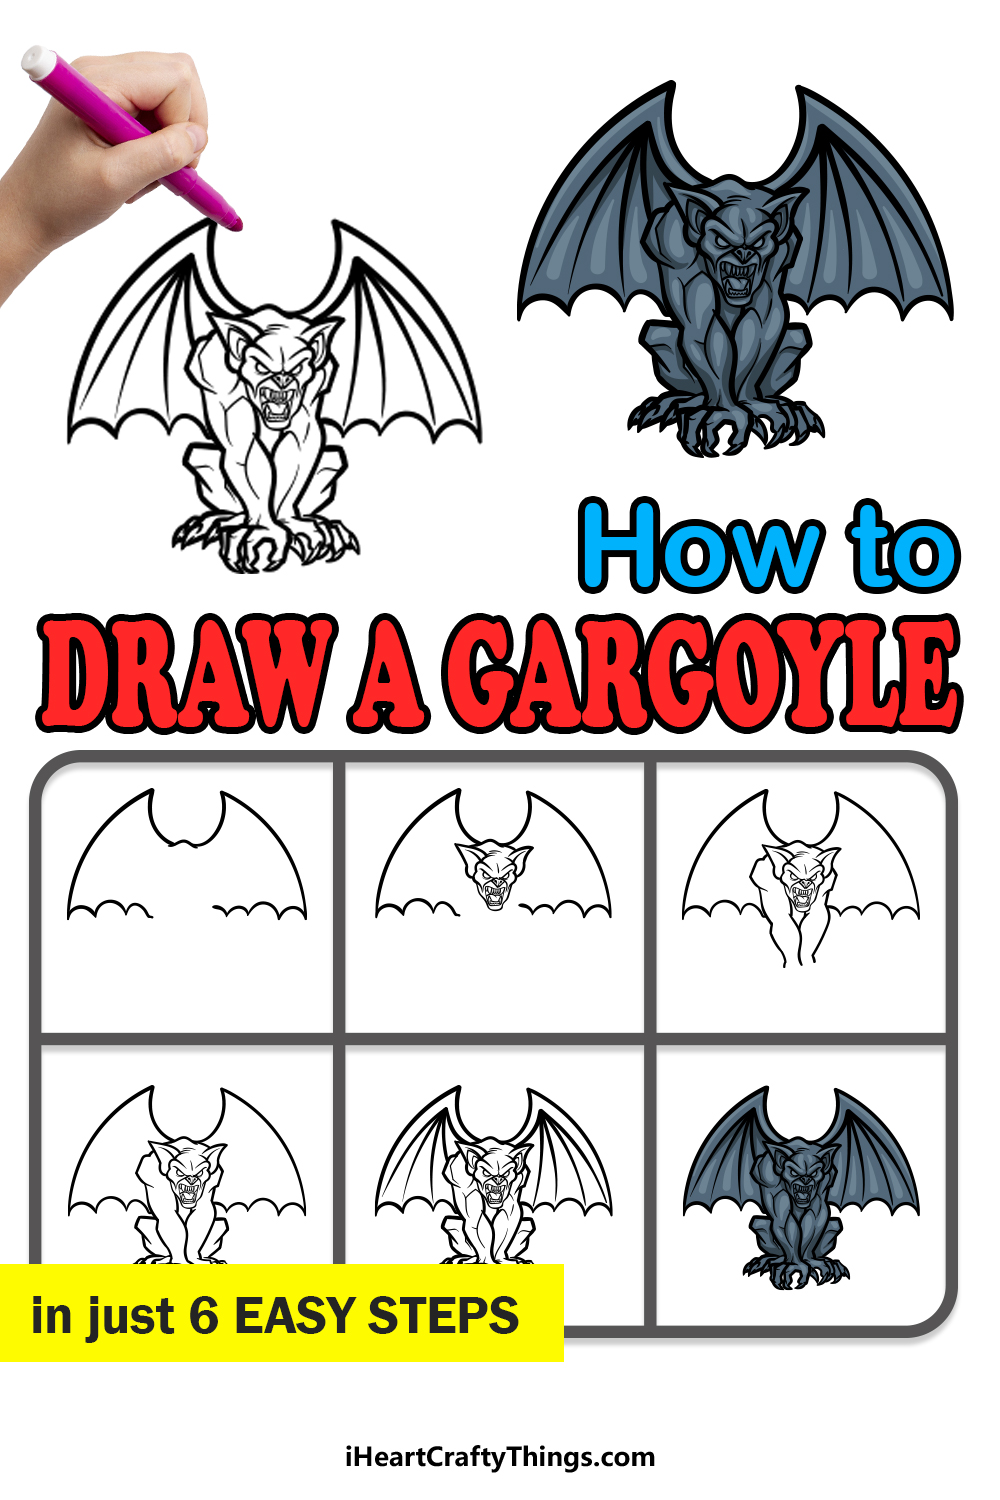 how to draw Gargoyle in 6 easy steps